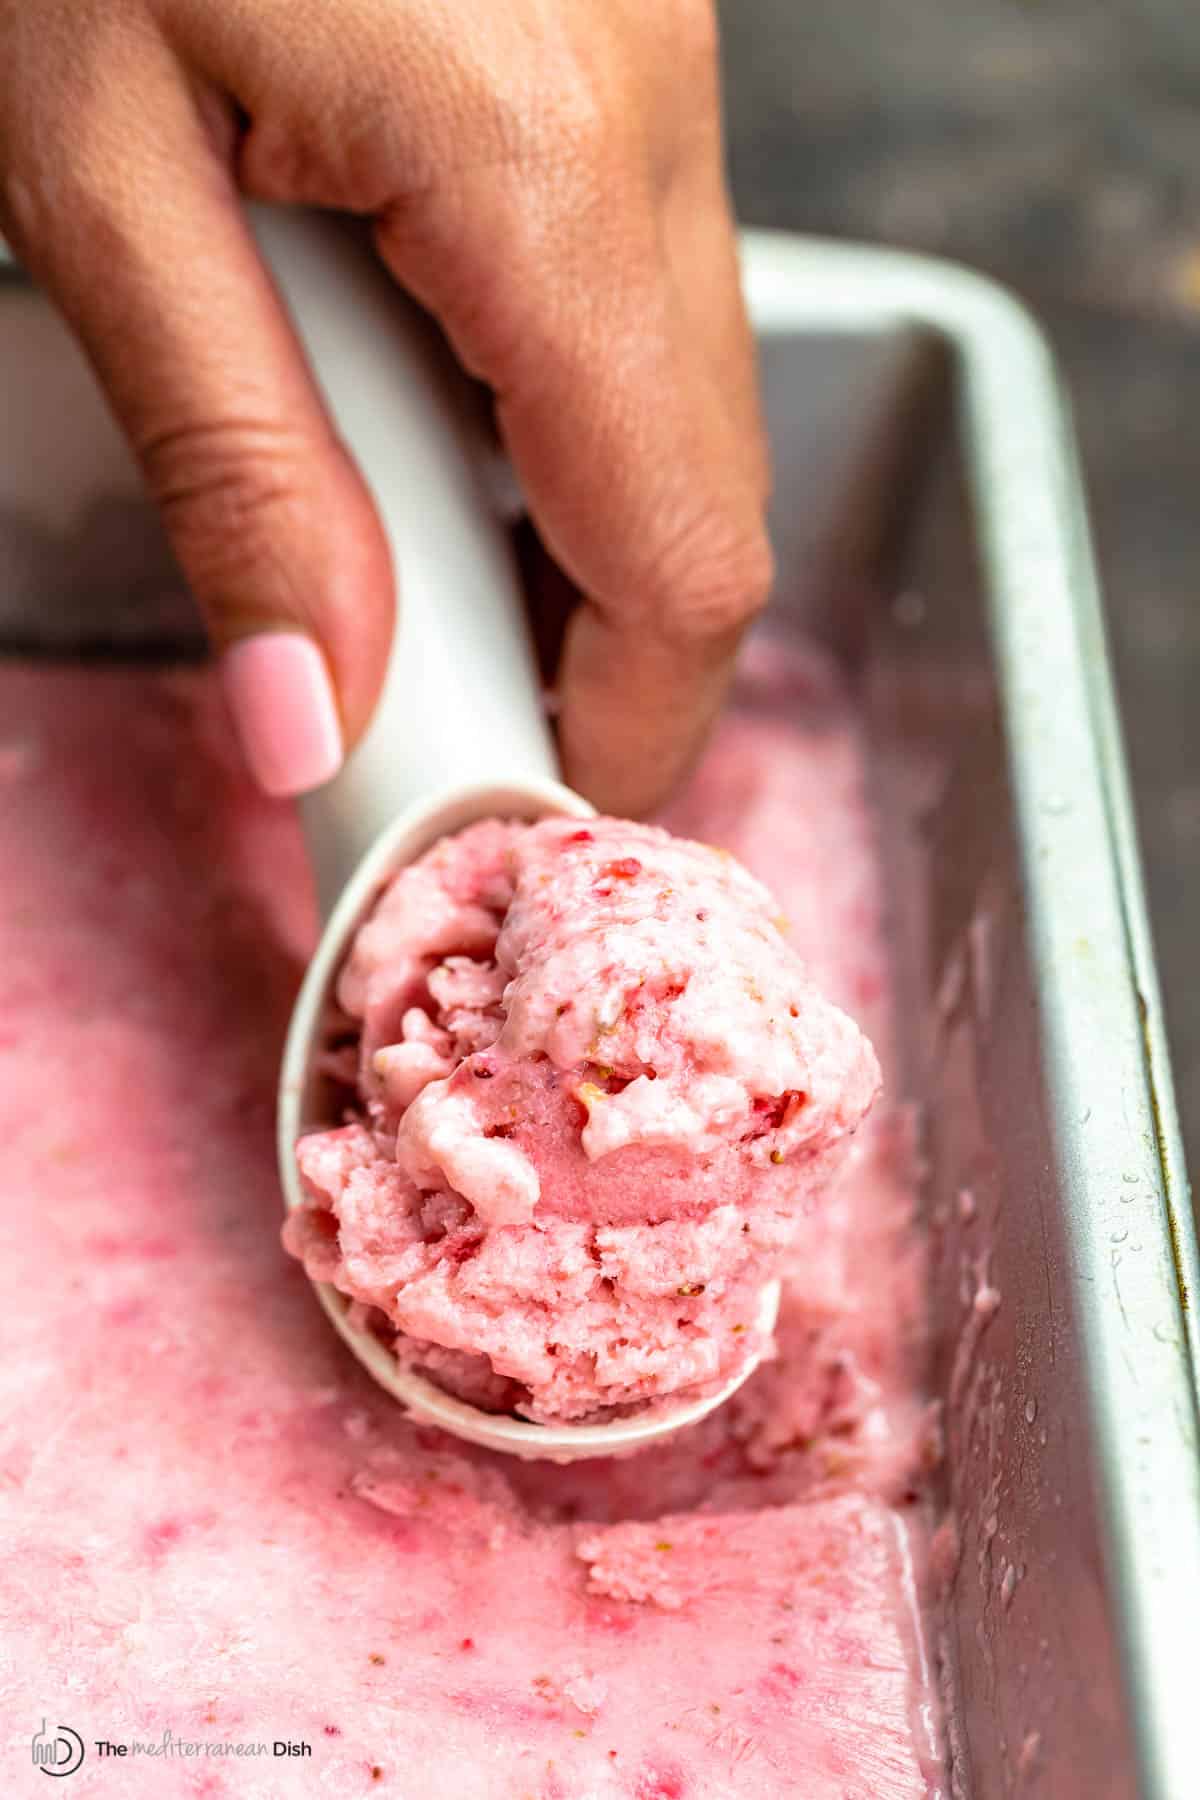 a hand holding ice cream scoop with frozen yogurt